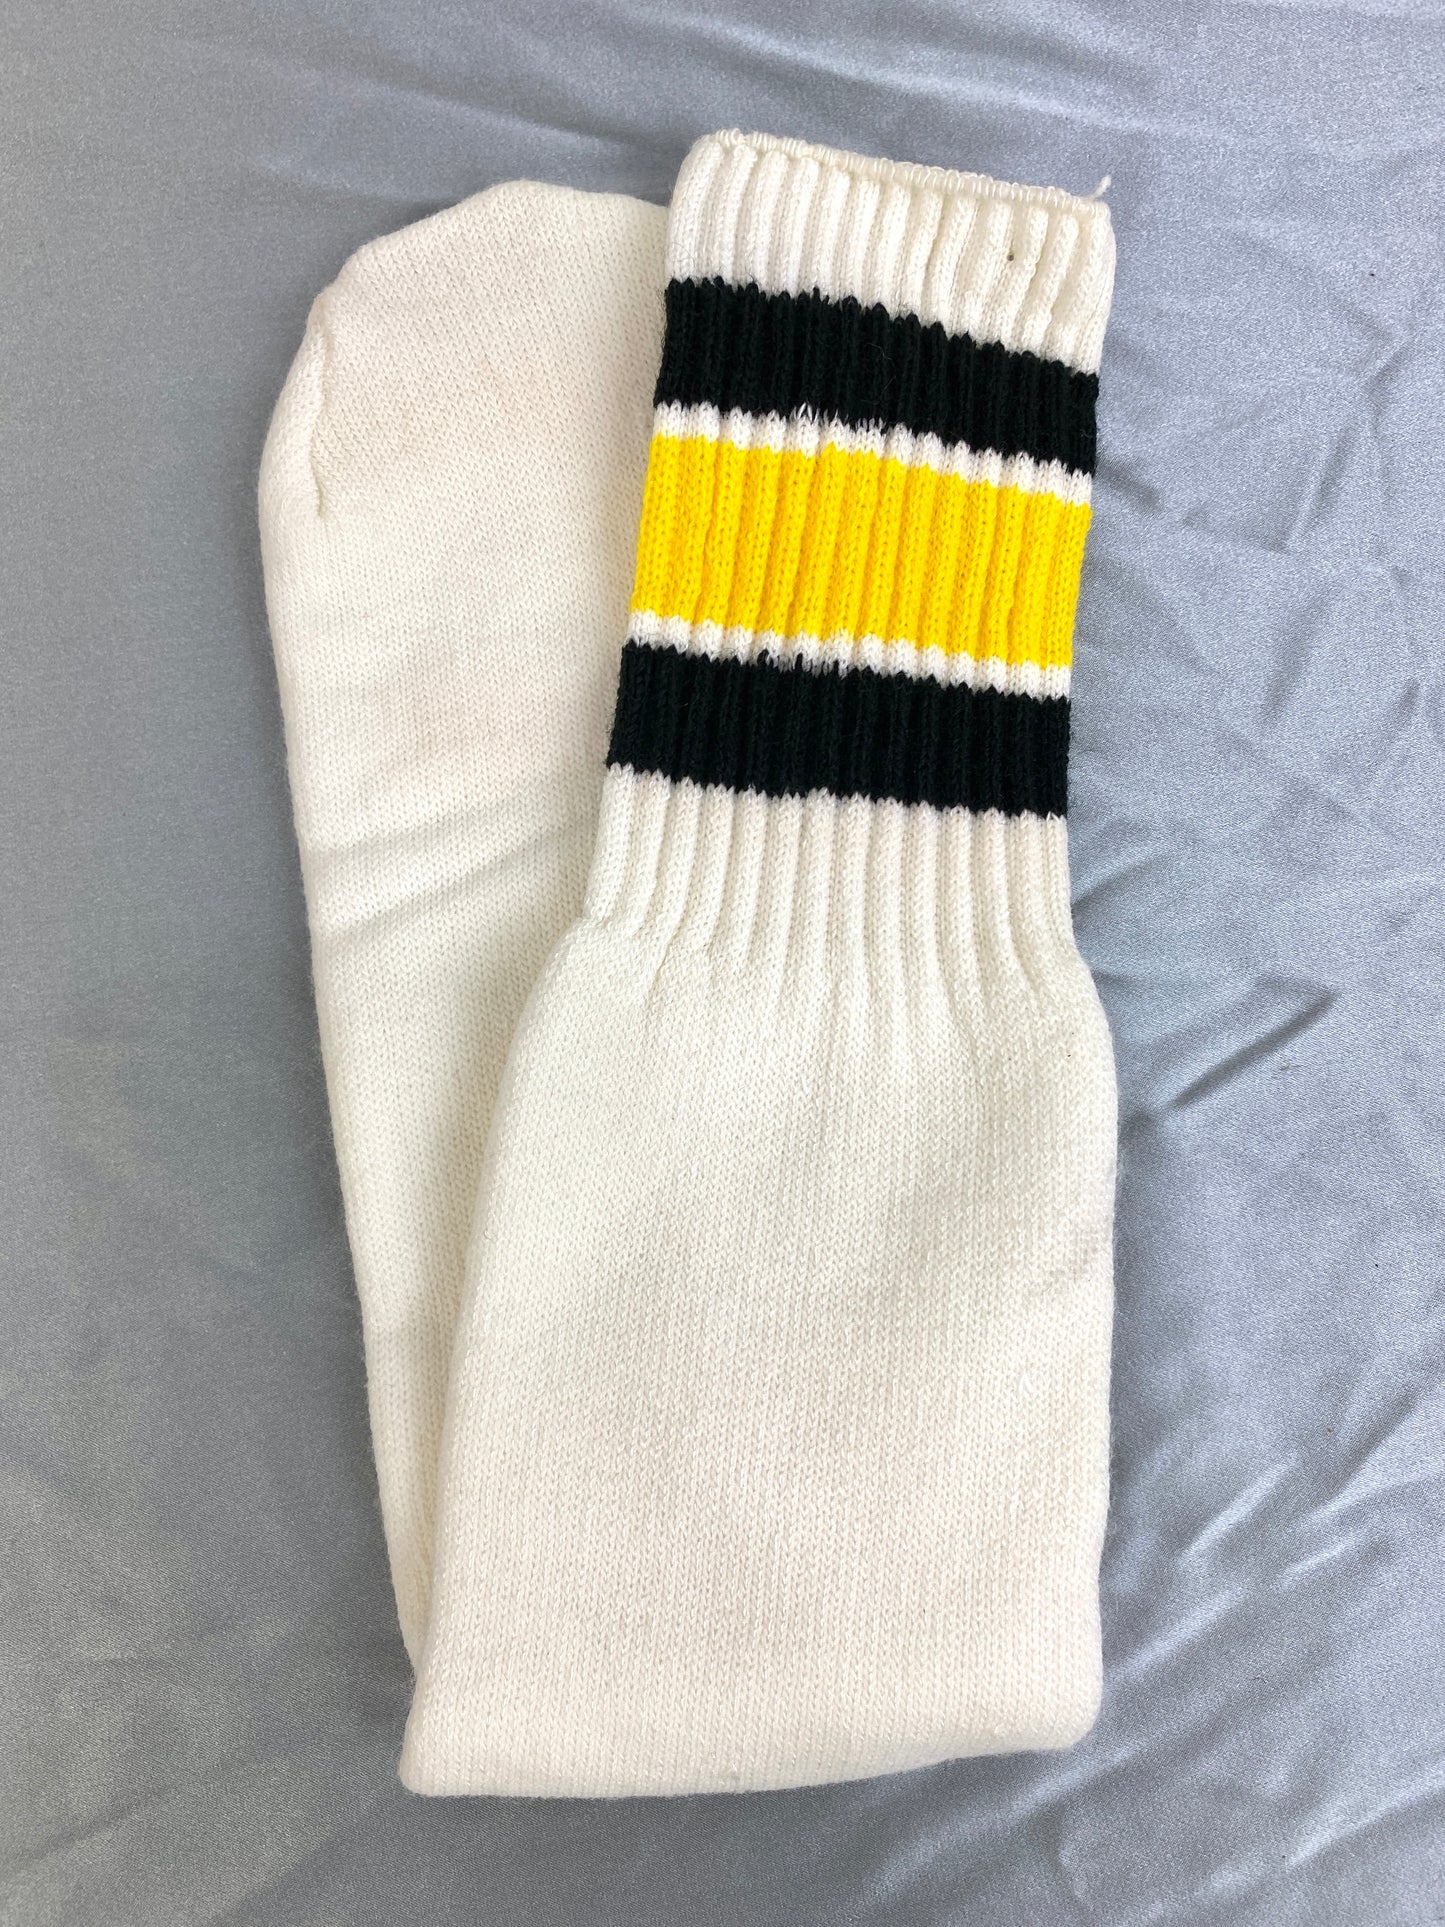 Vintage Deadstock White Cotton Tube Socks with Yellow & Black Stripes, Sports/ Gym, x2 Pair